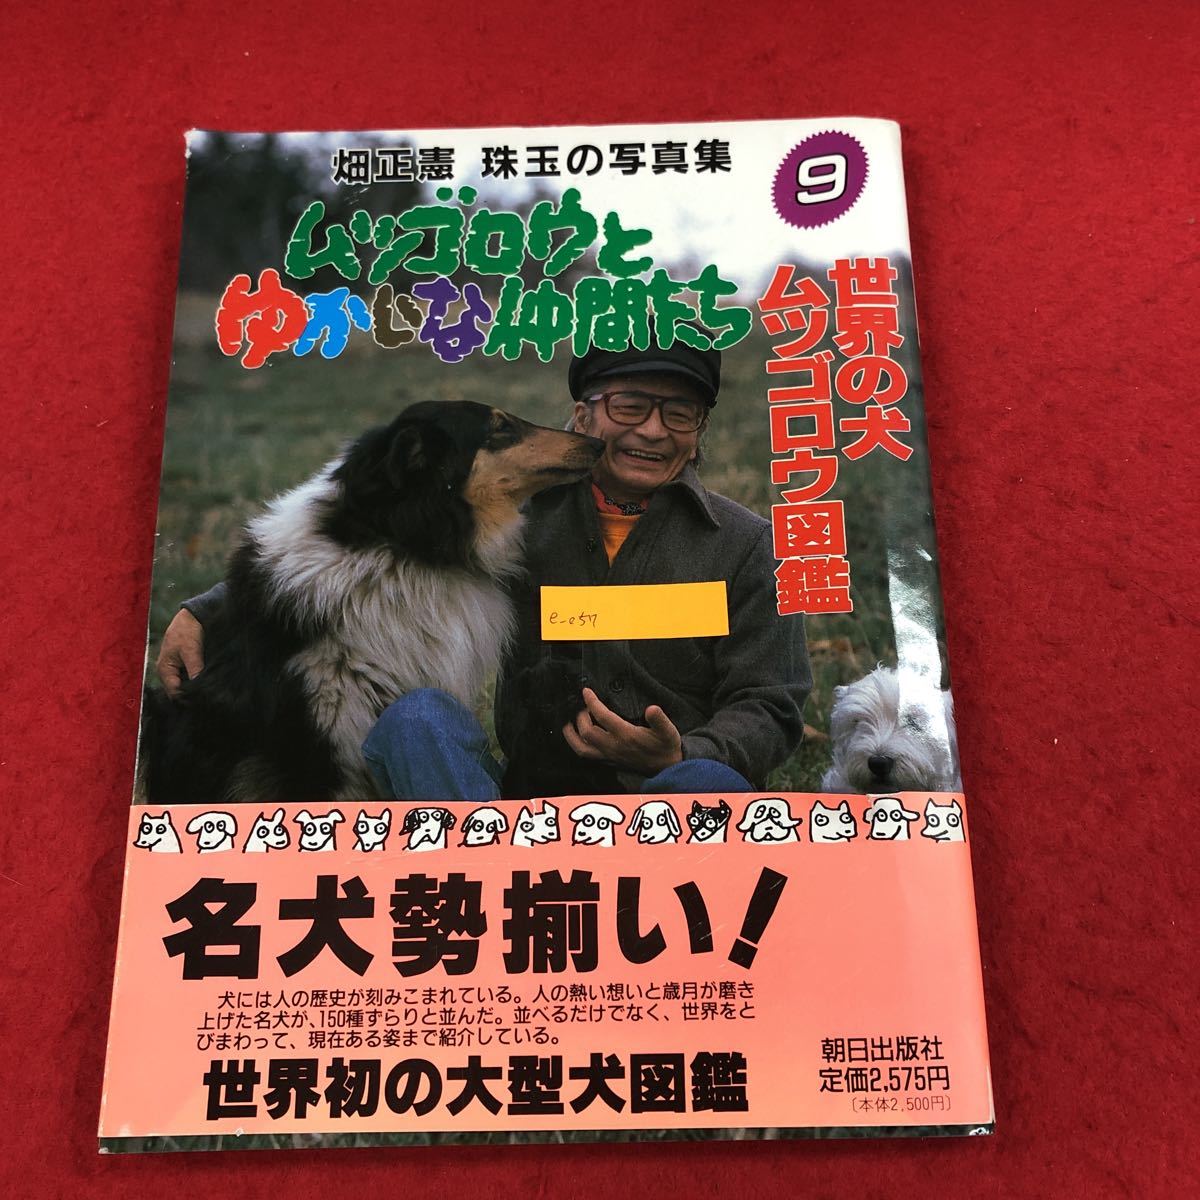 E-057 Mutsugorou и Ikkai Friends 9 World Dogs Mutsugorou Picture Books Фото книга Масанори Хатата, 1989 г. Первое издание опубликовано 150 Тип Введение Комментарий * 6